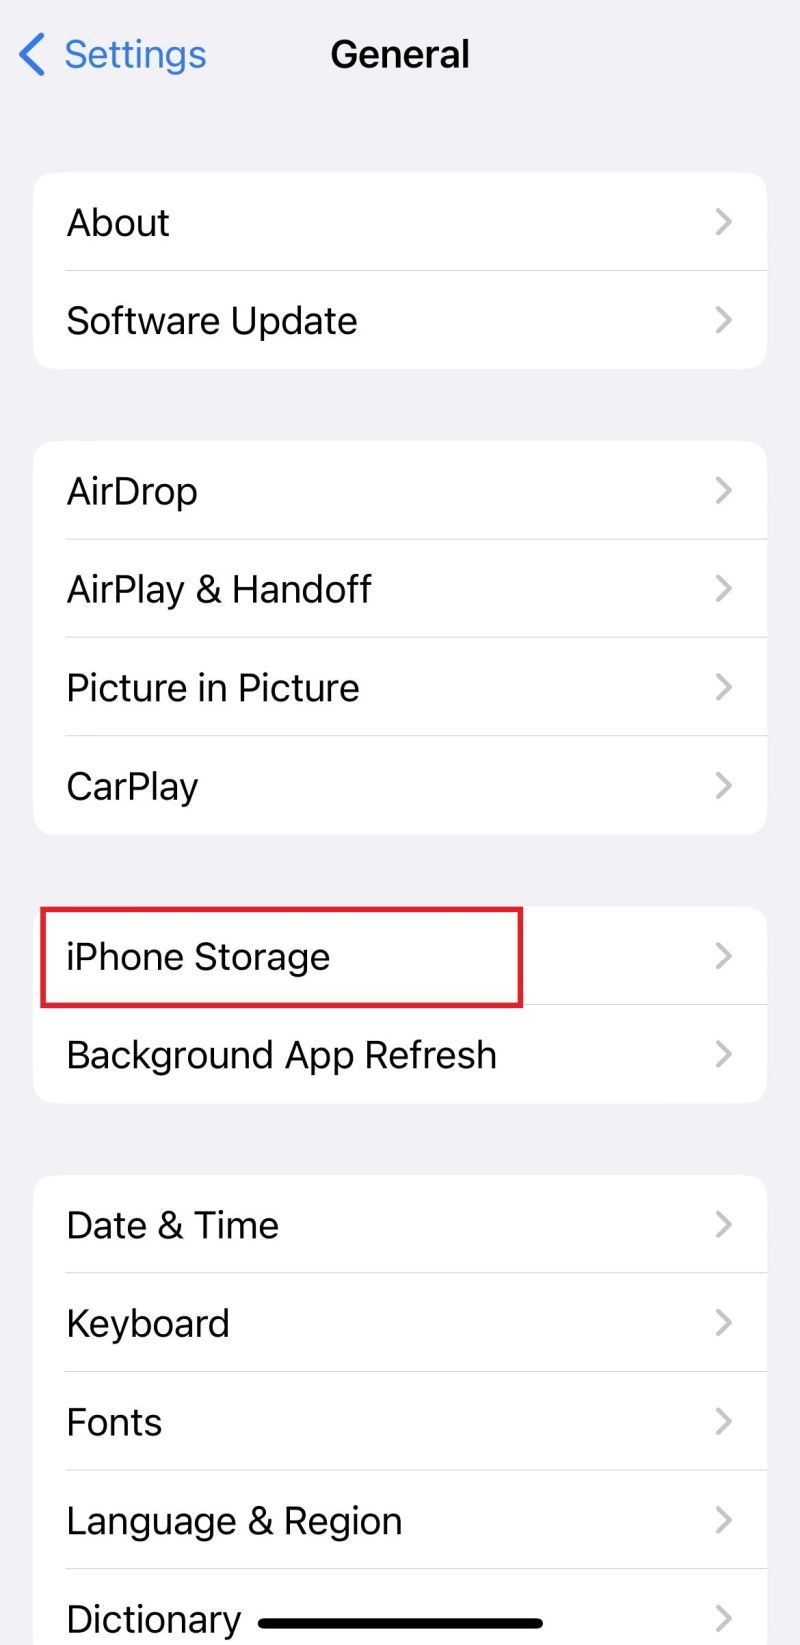 Screenshot of iPhone Storage option under Settings